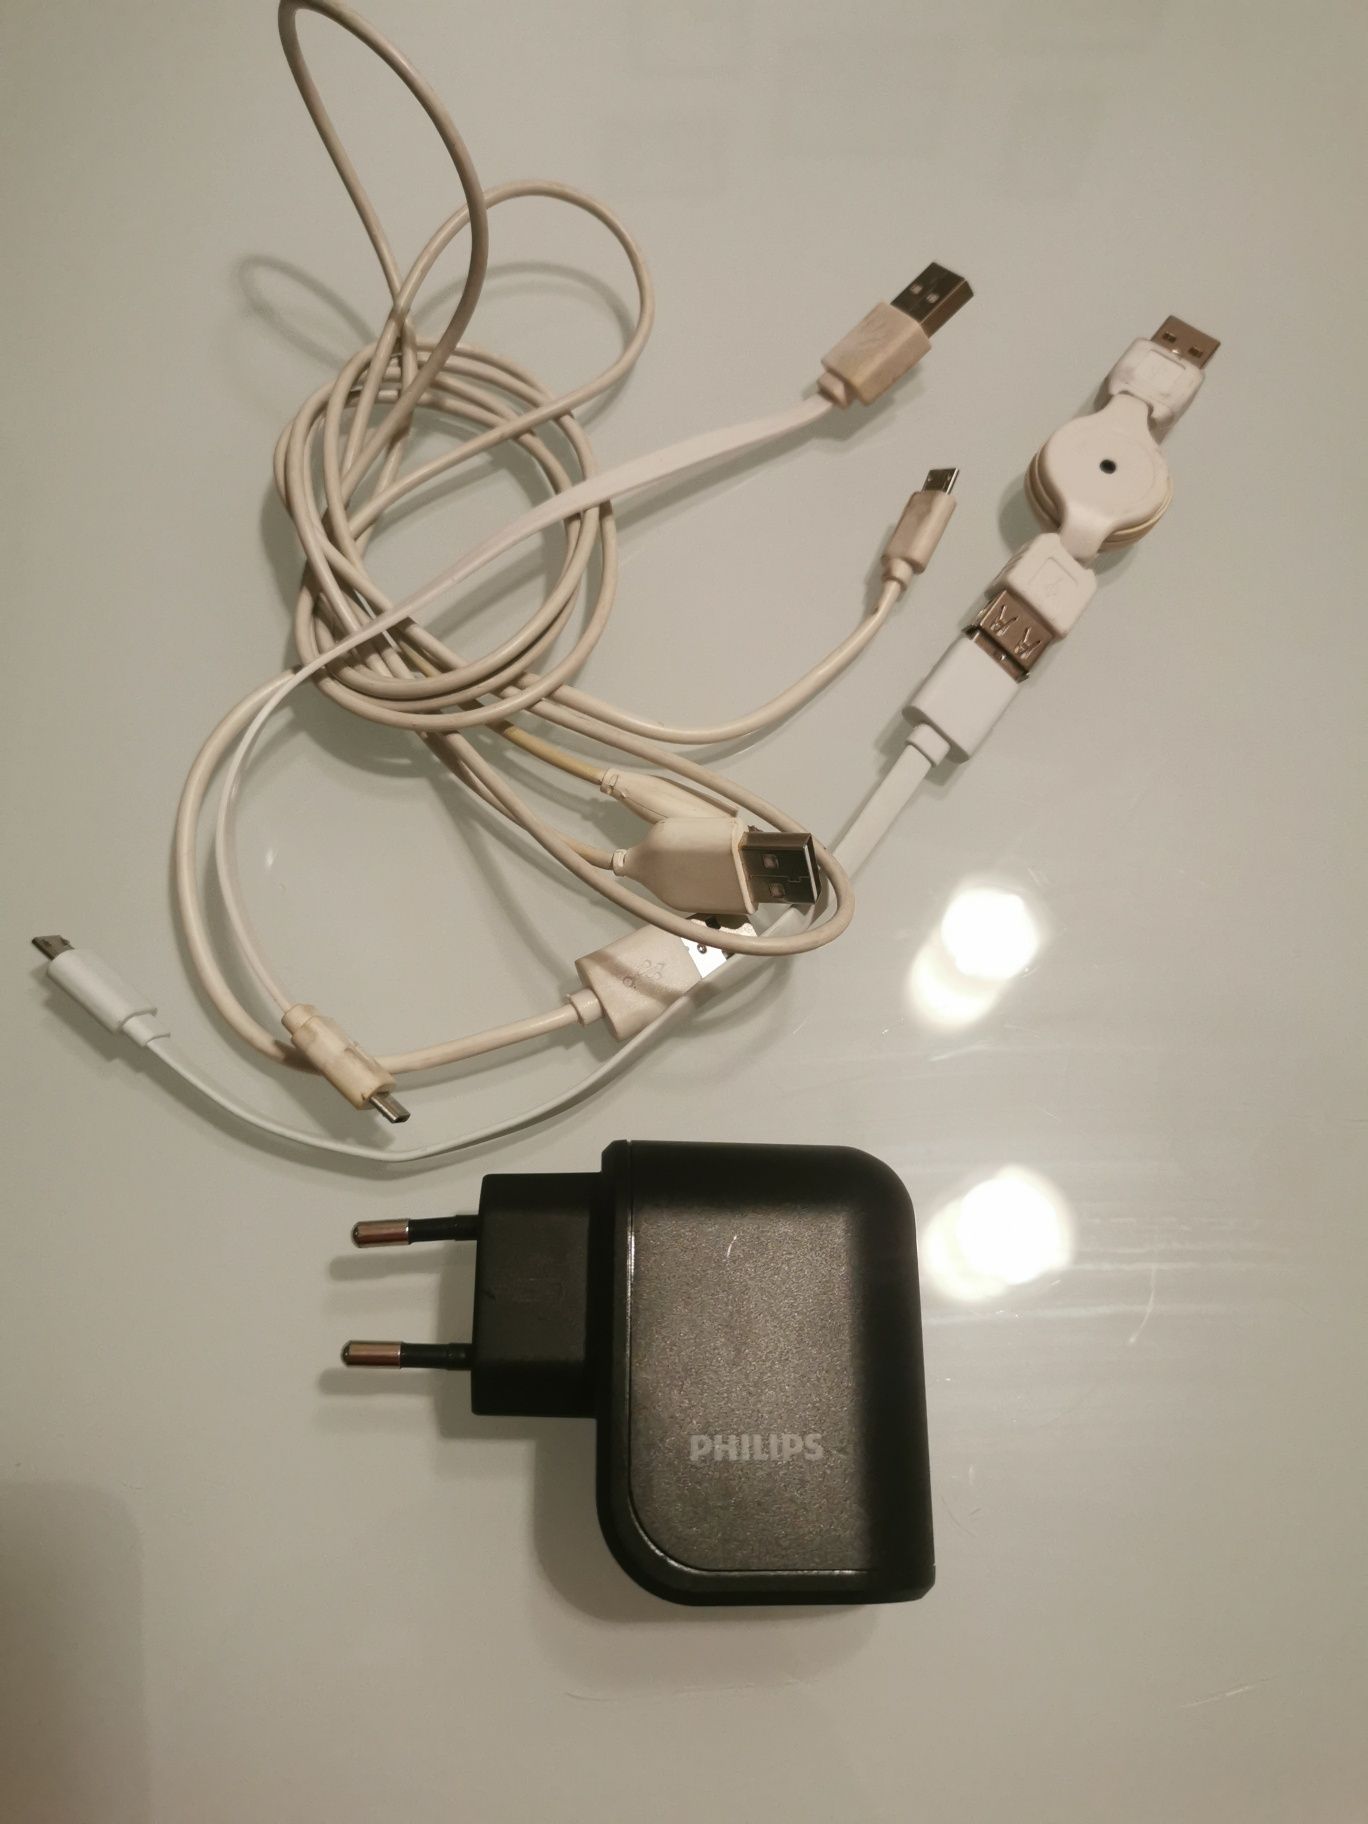 Podwójna ładowarka do telefonu USB Philips + cztery kabelki gratis